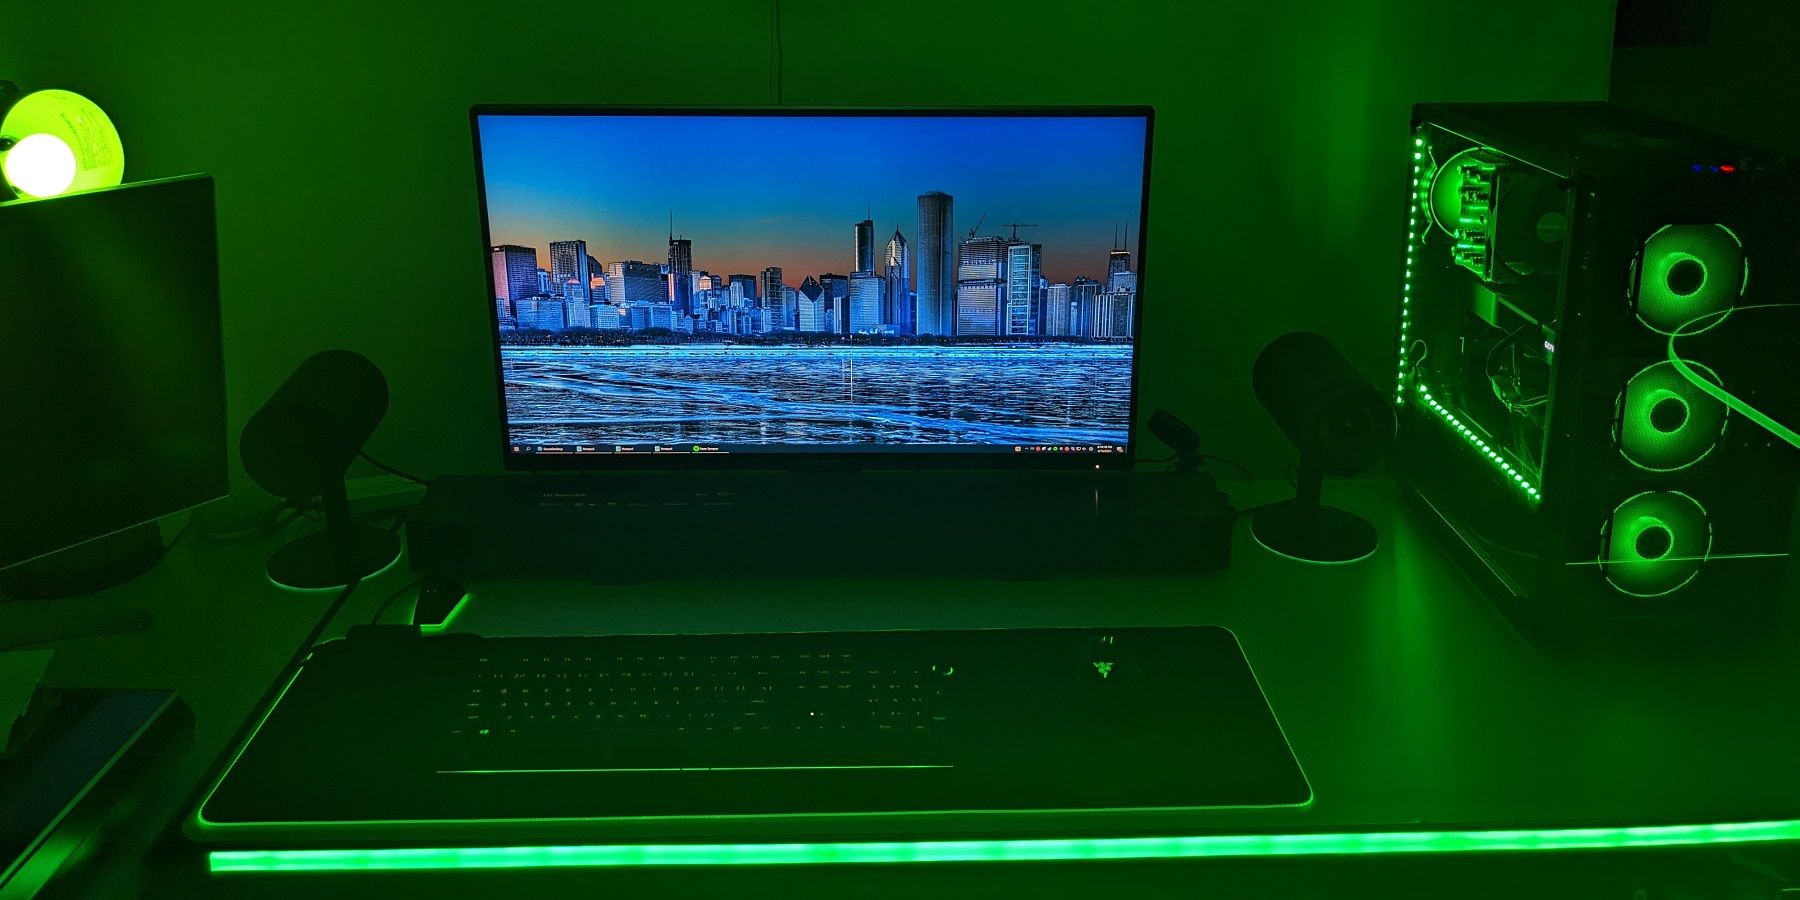 Govee - RGBIC LED Neon Rope Light for Desks 6.5ft - Mulit